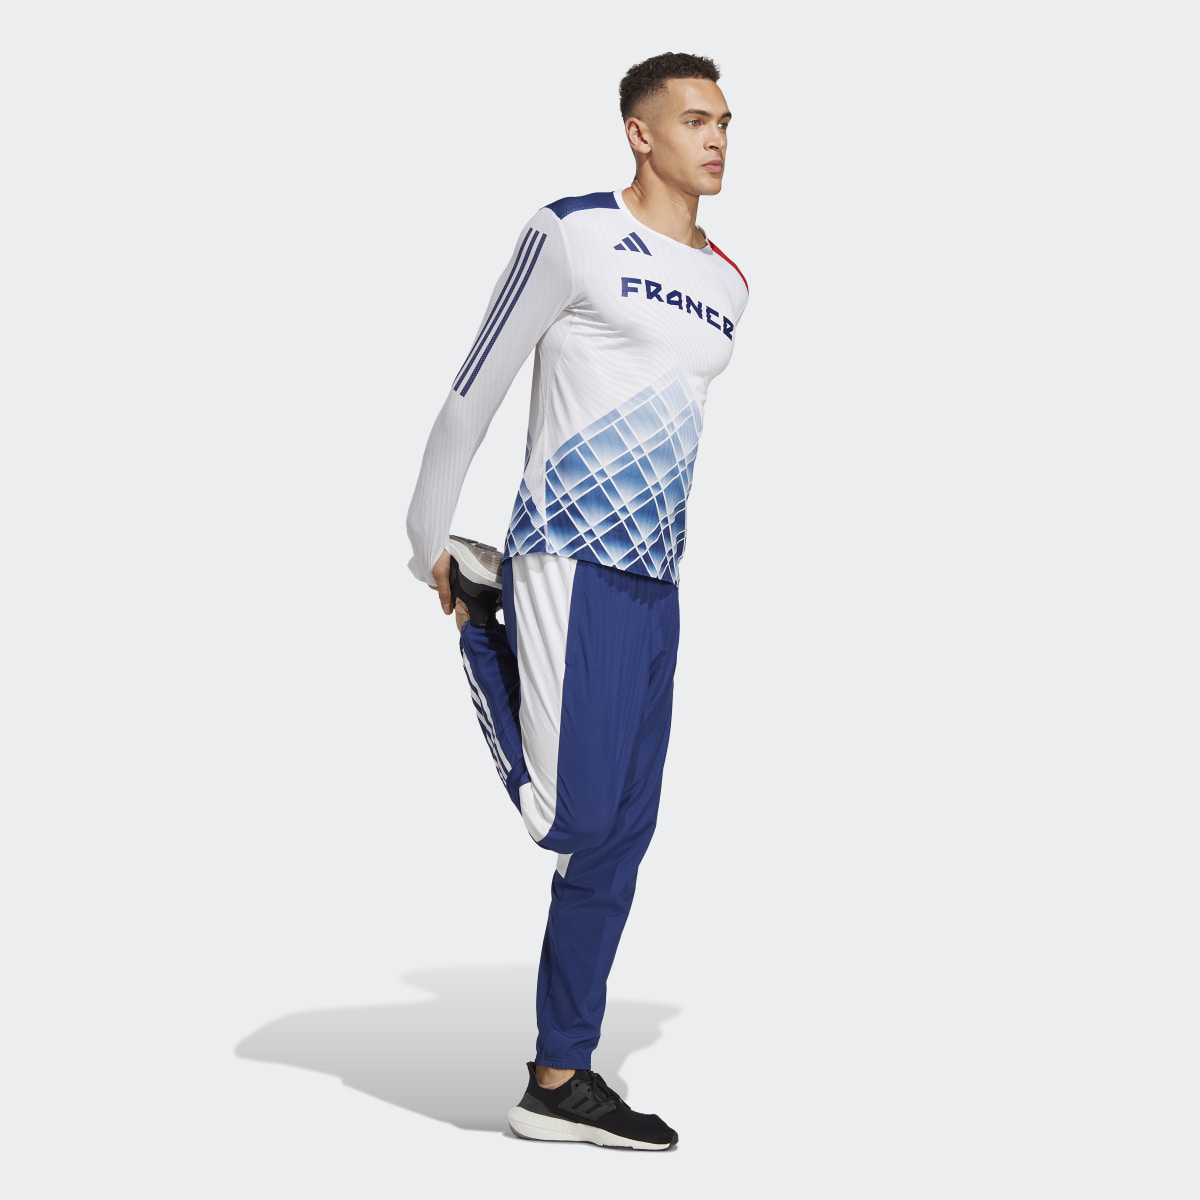 Adidas Adizero Promo Long Sleeve Long-Sleeve Top. 4